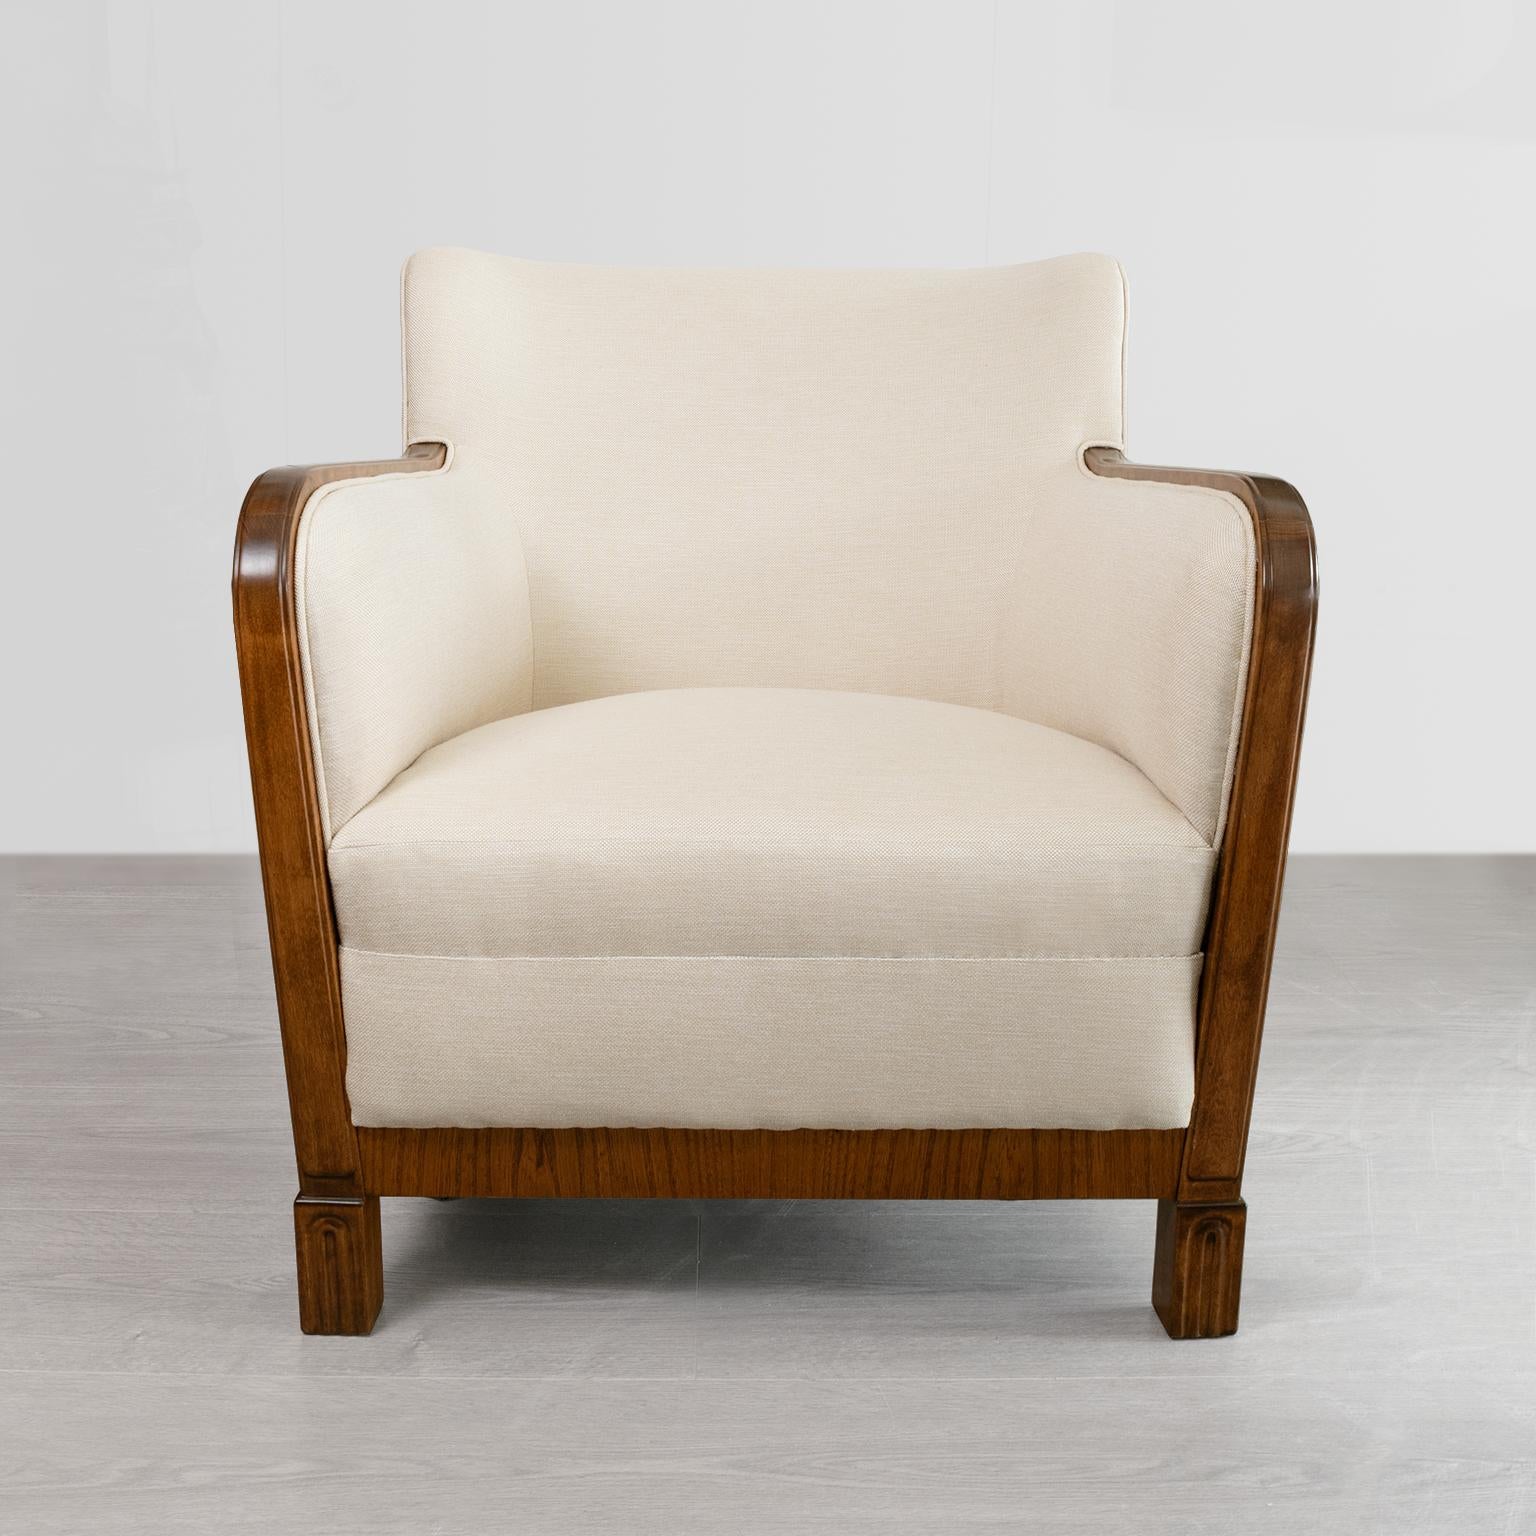 20th Century Sleek Pair of Scandinavian Modern Sycamore Chairs